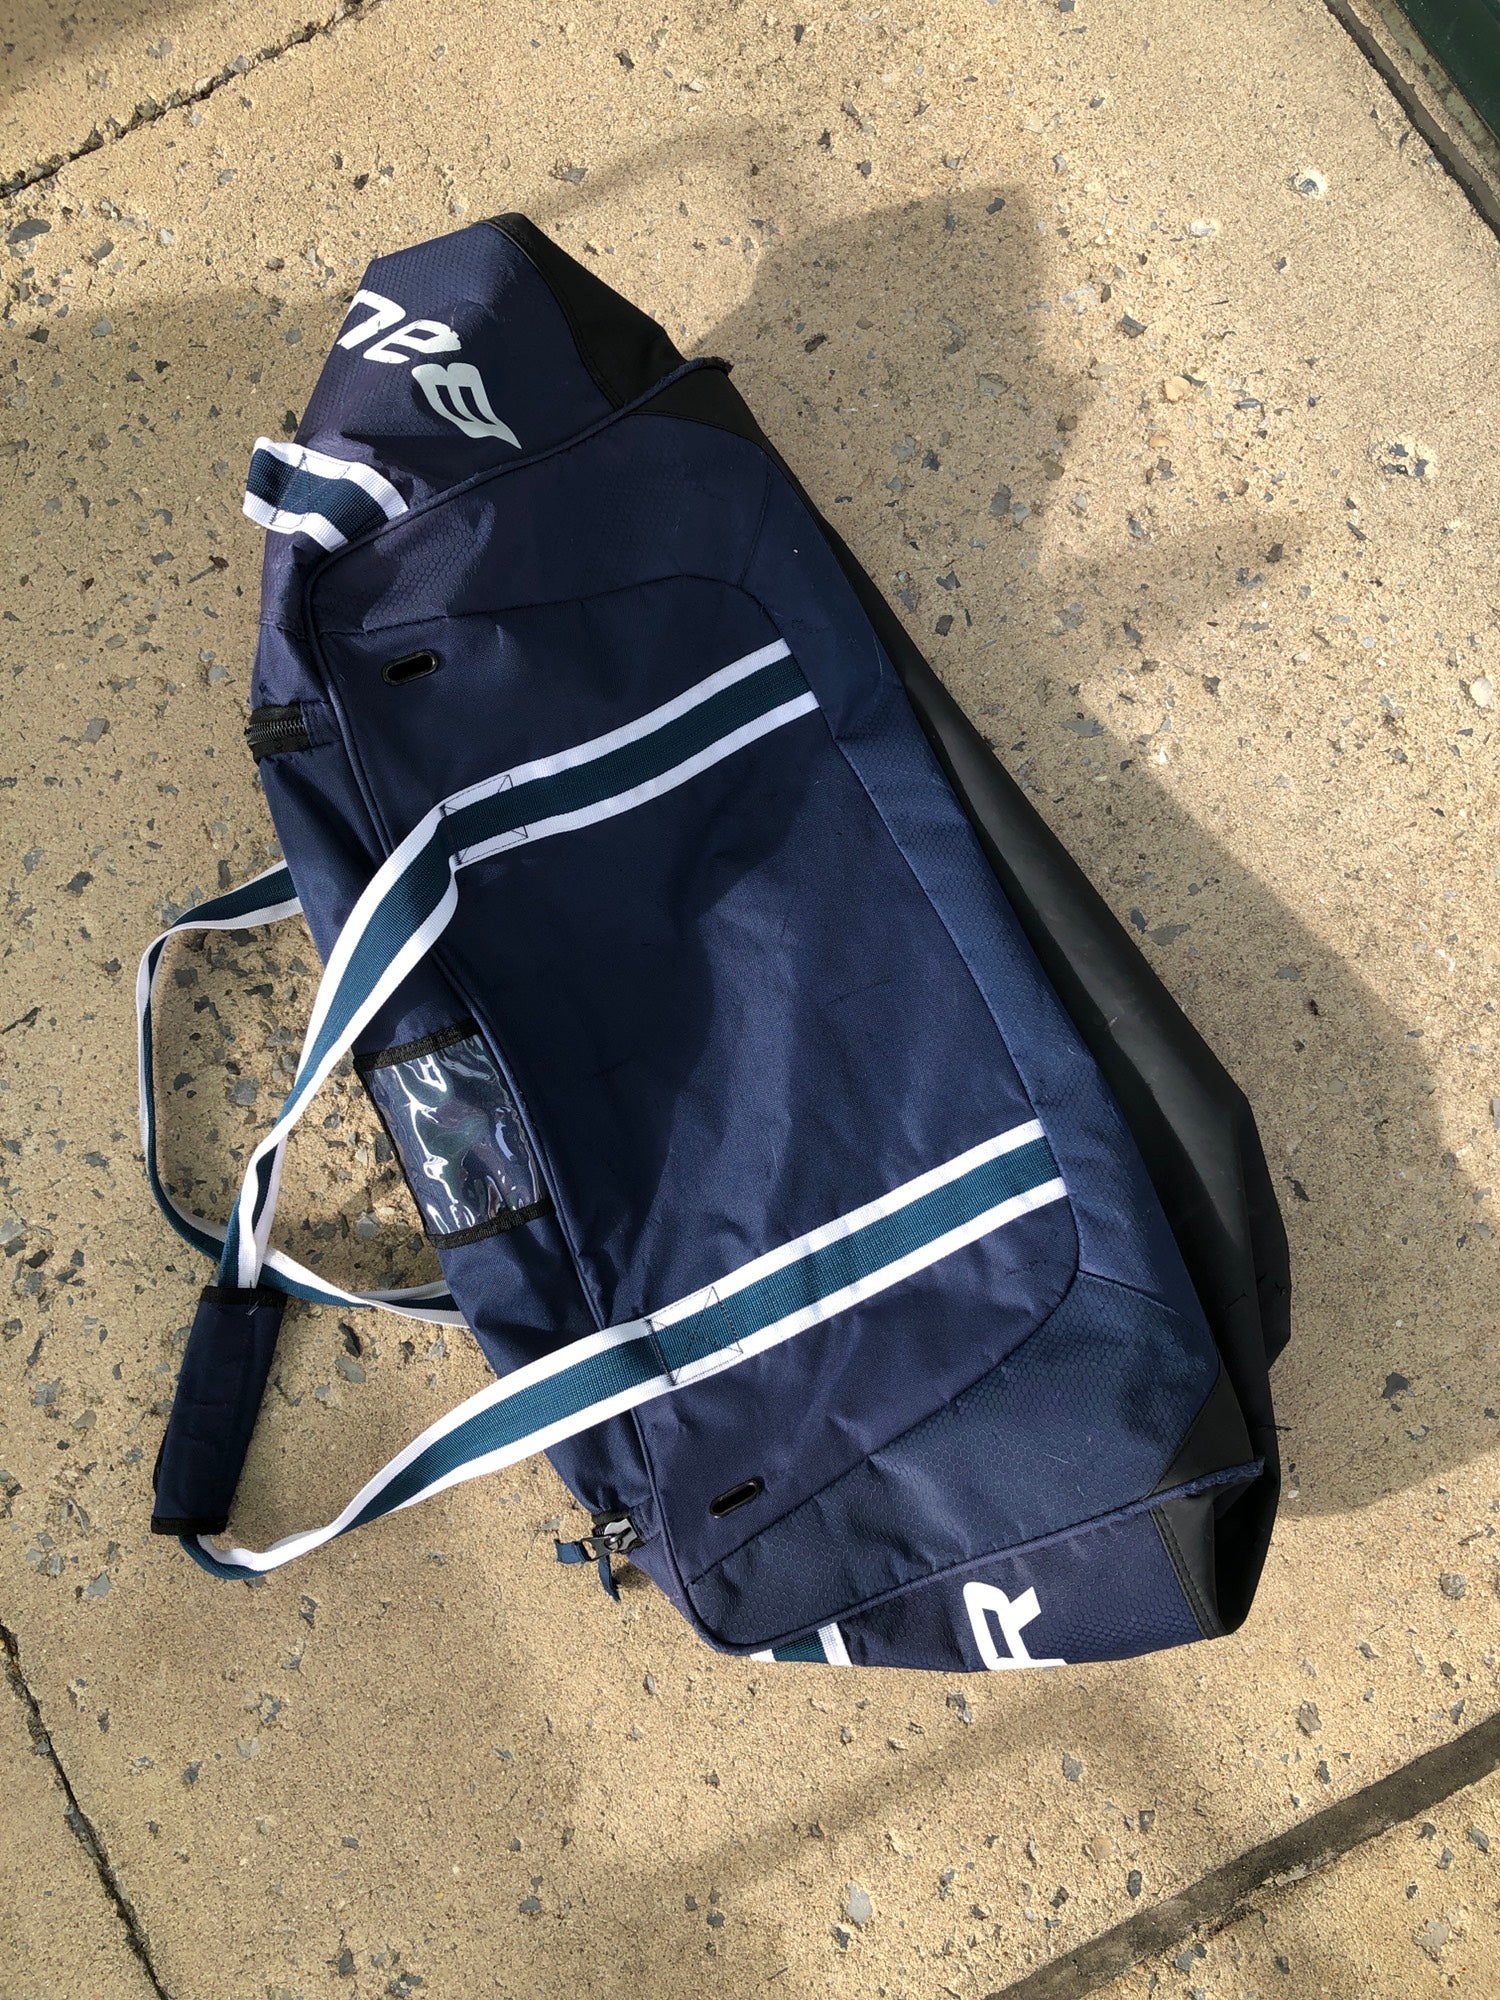 Vintage Bauer “Labatt Blue” Hockey Bag